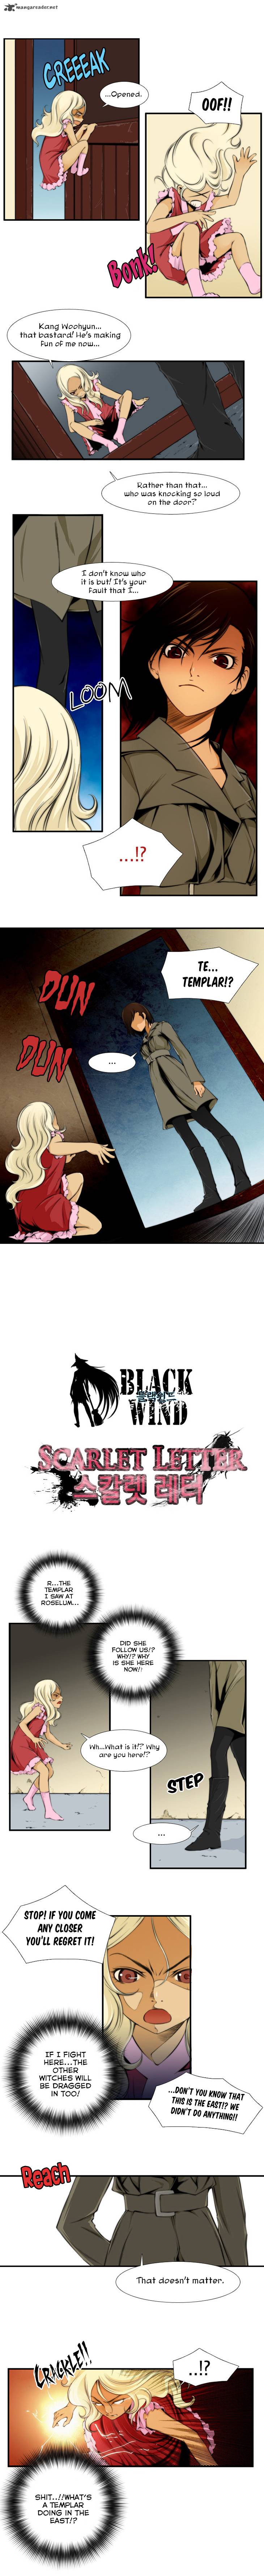 Black Wind 20 3